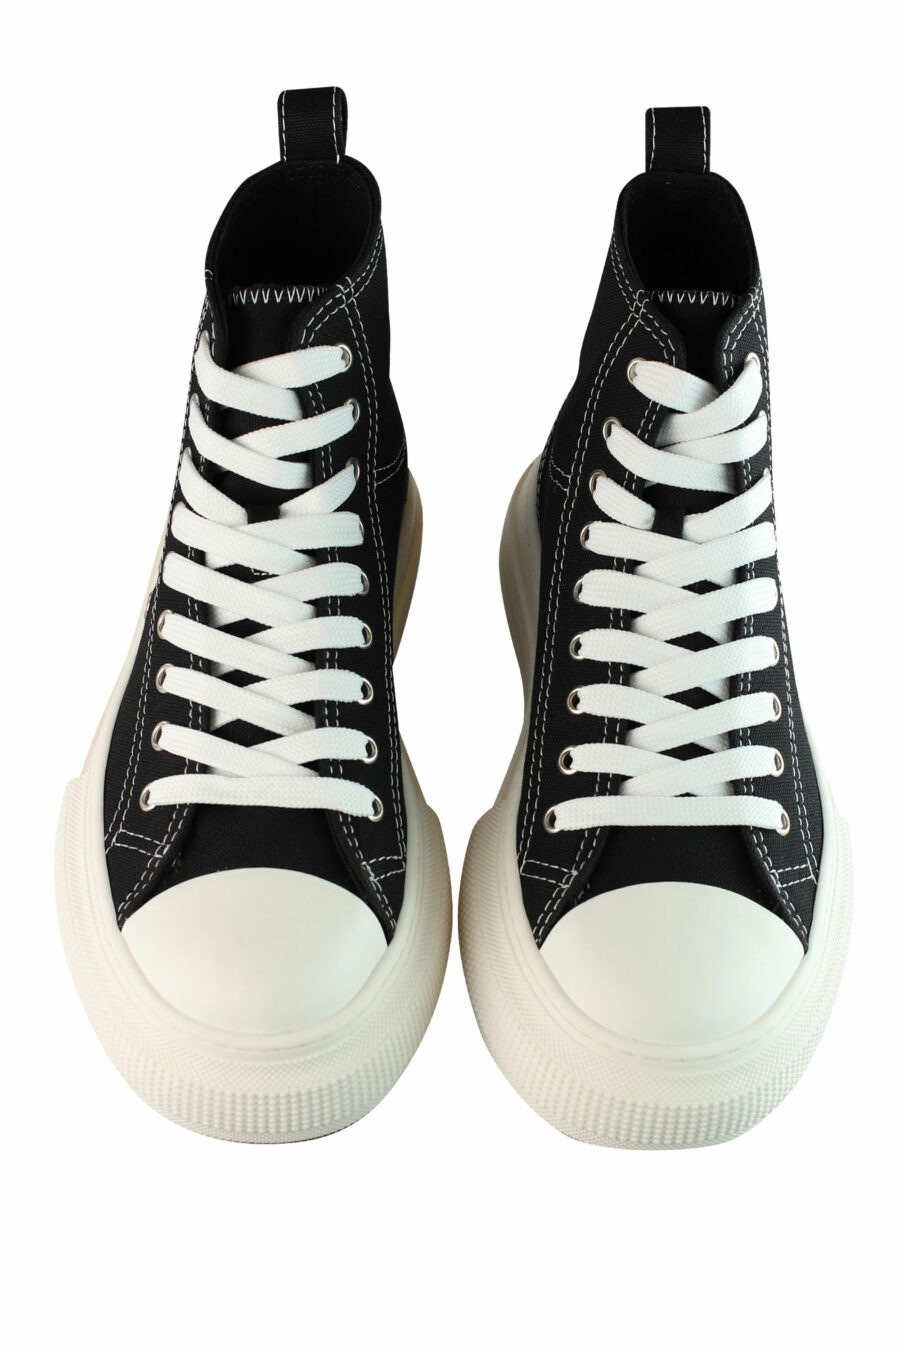 Sapatilhas pretas estilo bota com plataforma e mini logótipo - IMG 1371